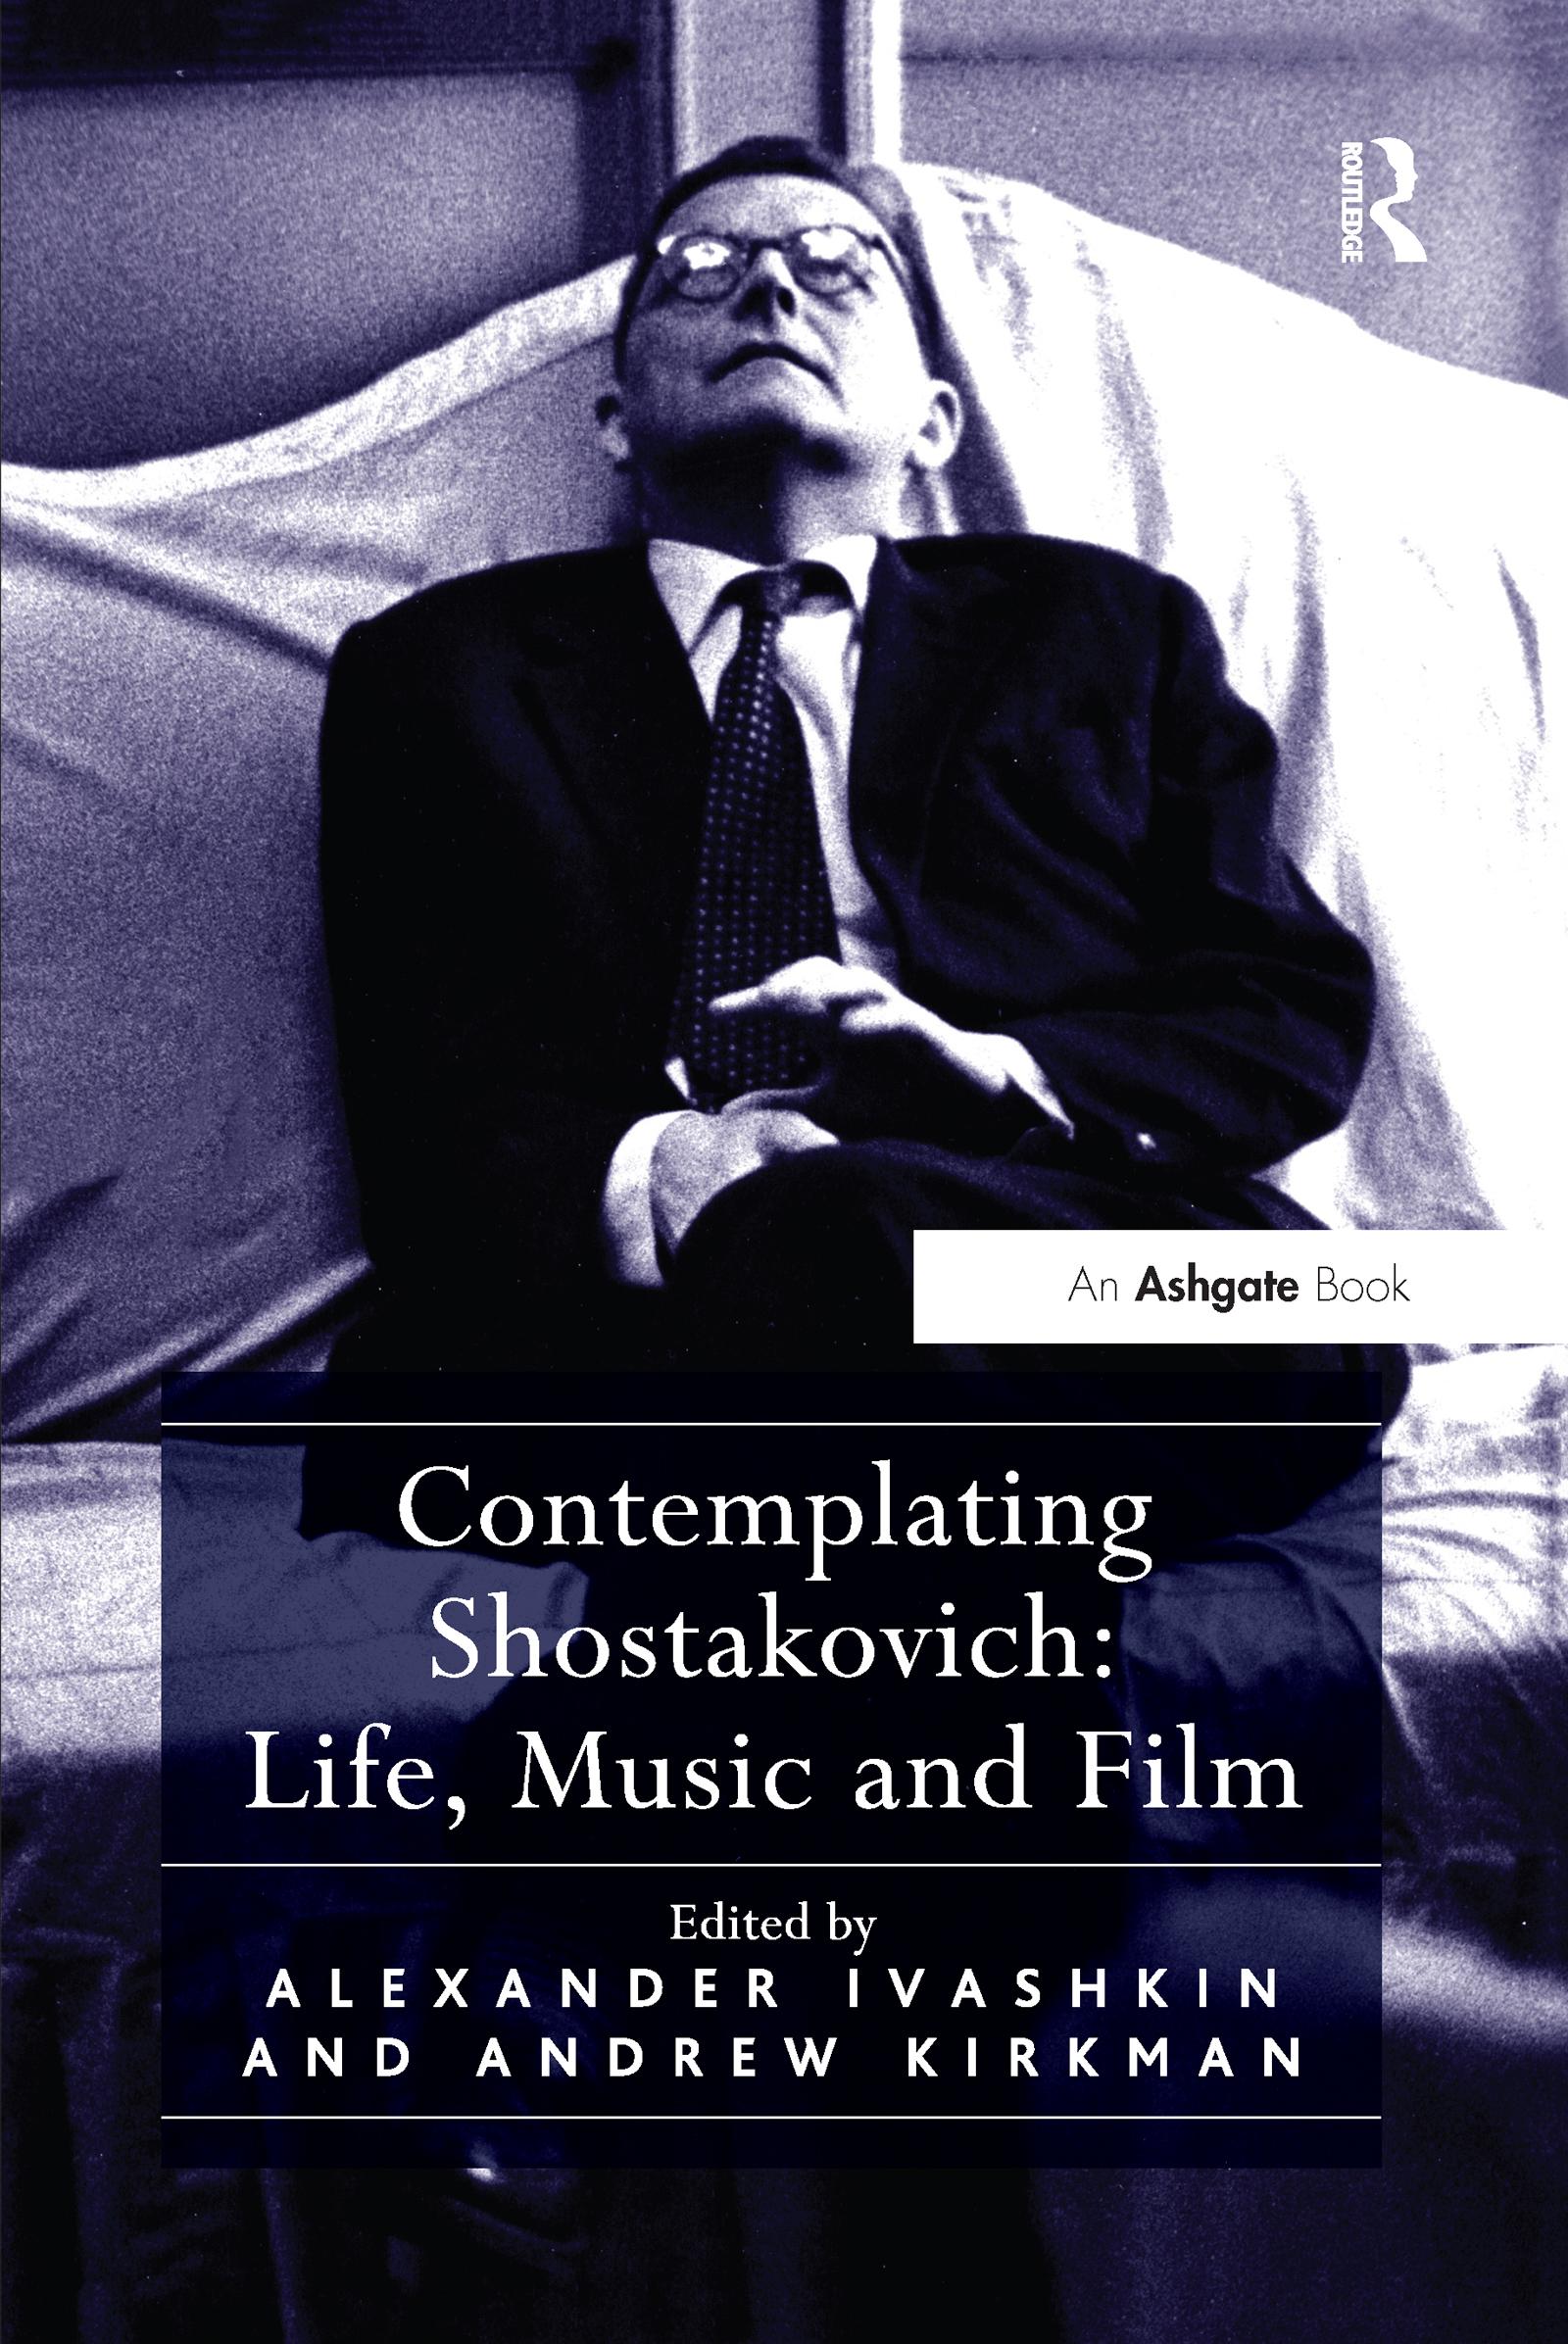 Kirkman, P: Contemplating Shostakovich: Life, Music and Film - Andrew Kirkman